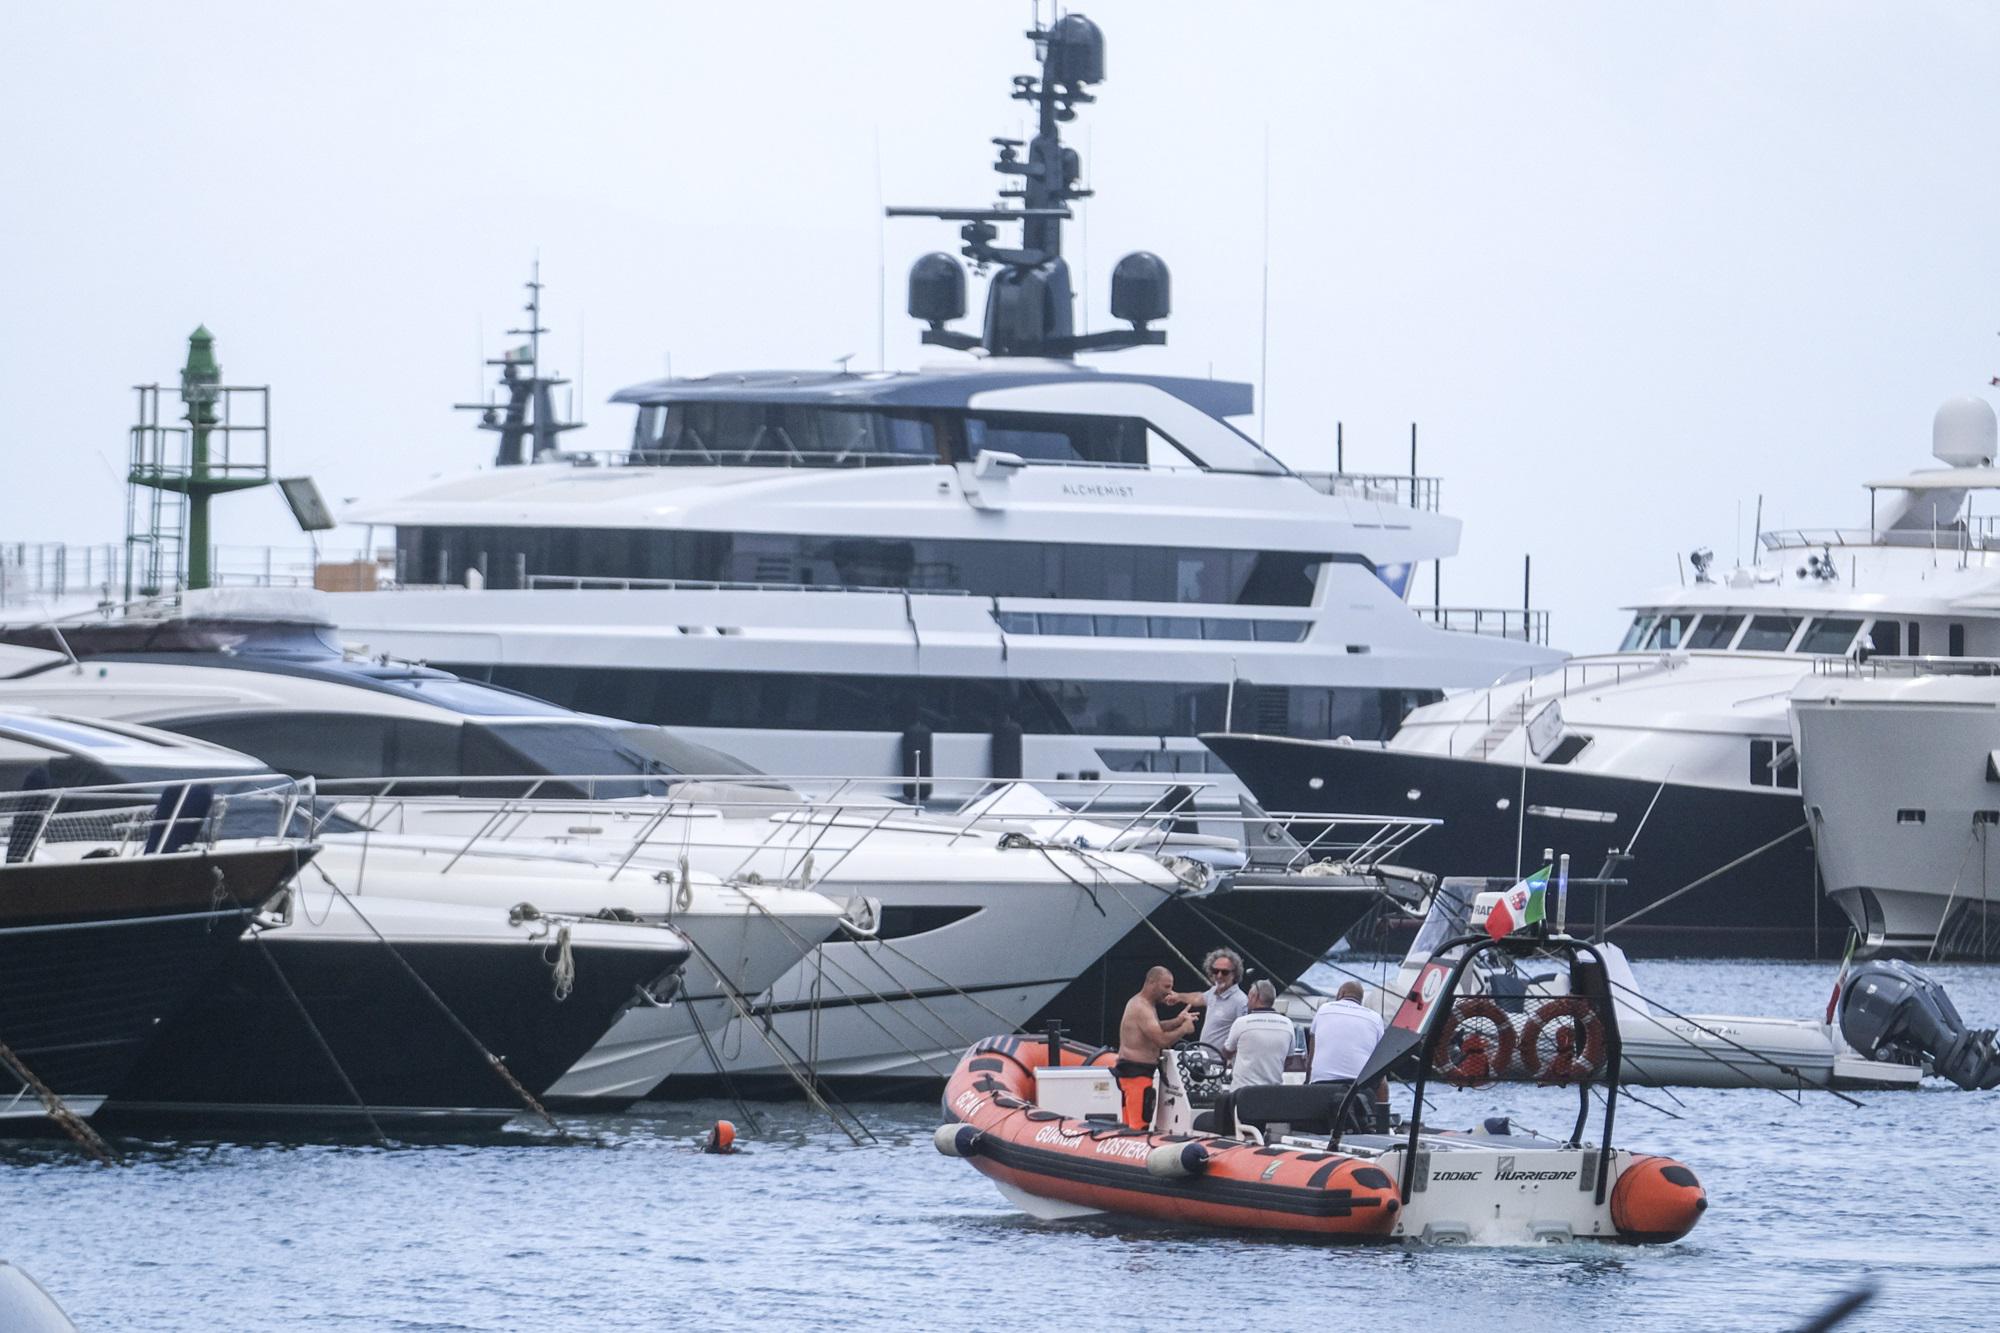 Napoli - donna travolta e uccisa sul kayak: individuato modello barca killer